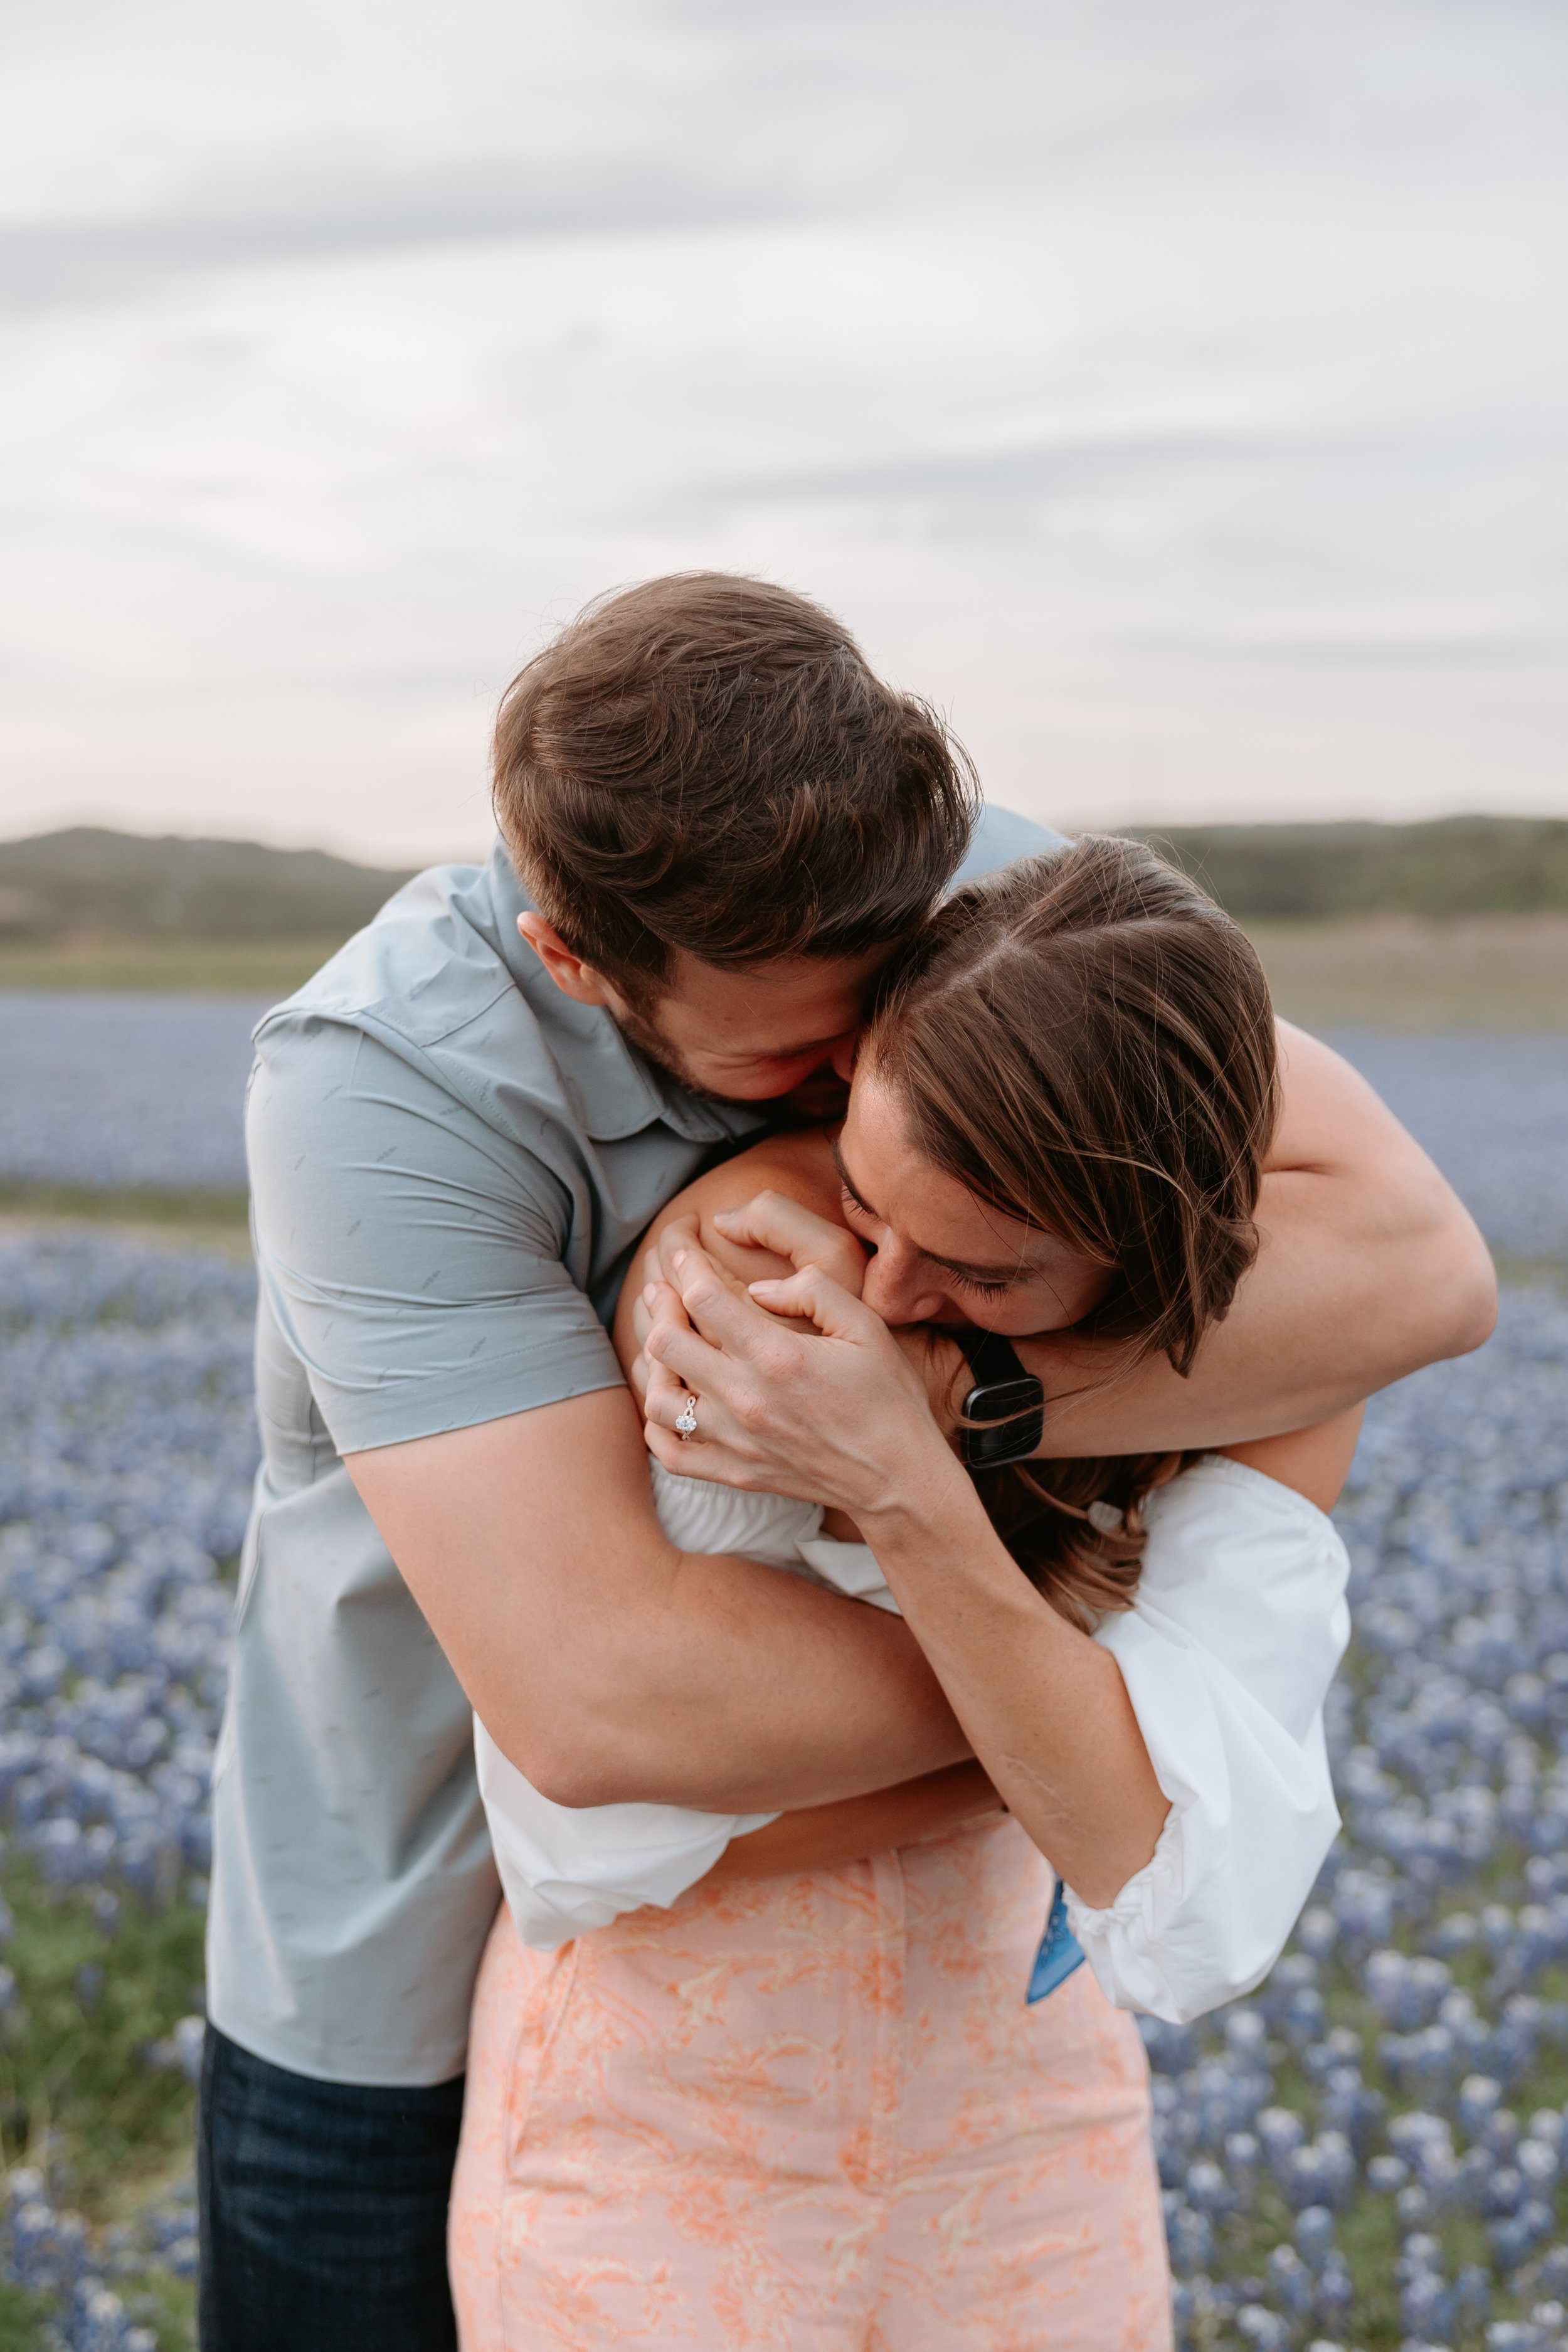 Man hugs woman from behind in a field of blue flowers.